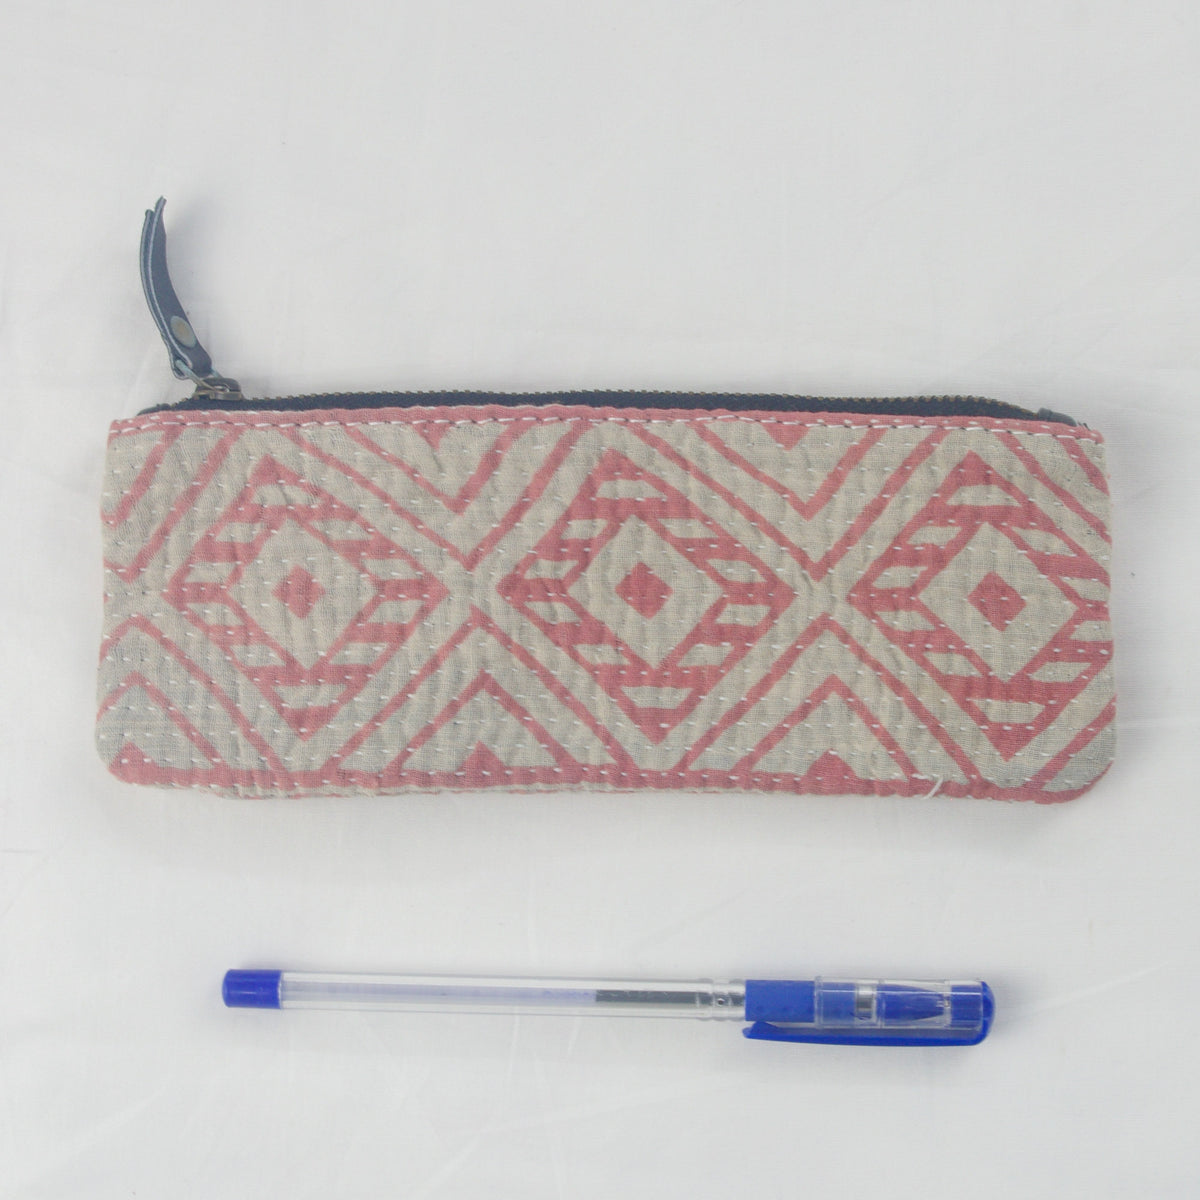 Vintage Kantha Small Pencil Case - Pink Grey Kantha